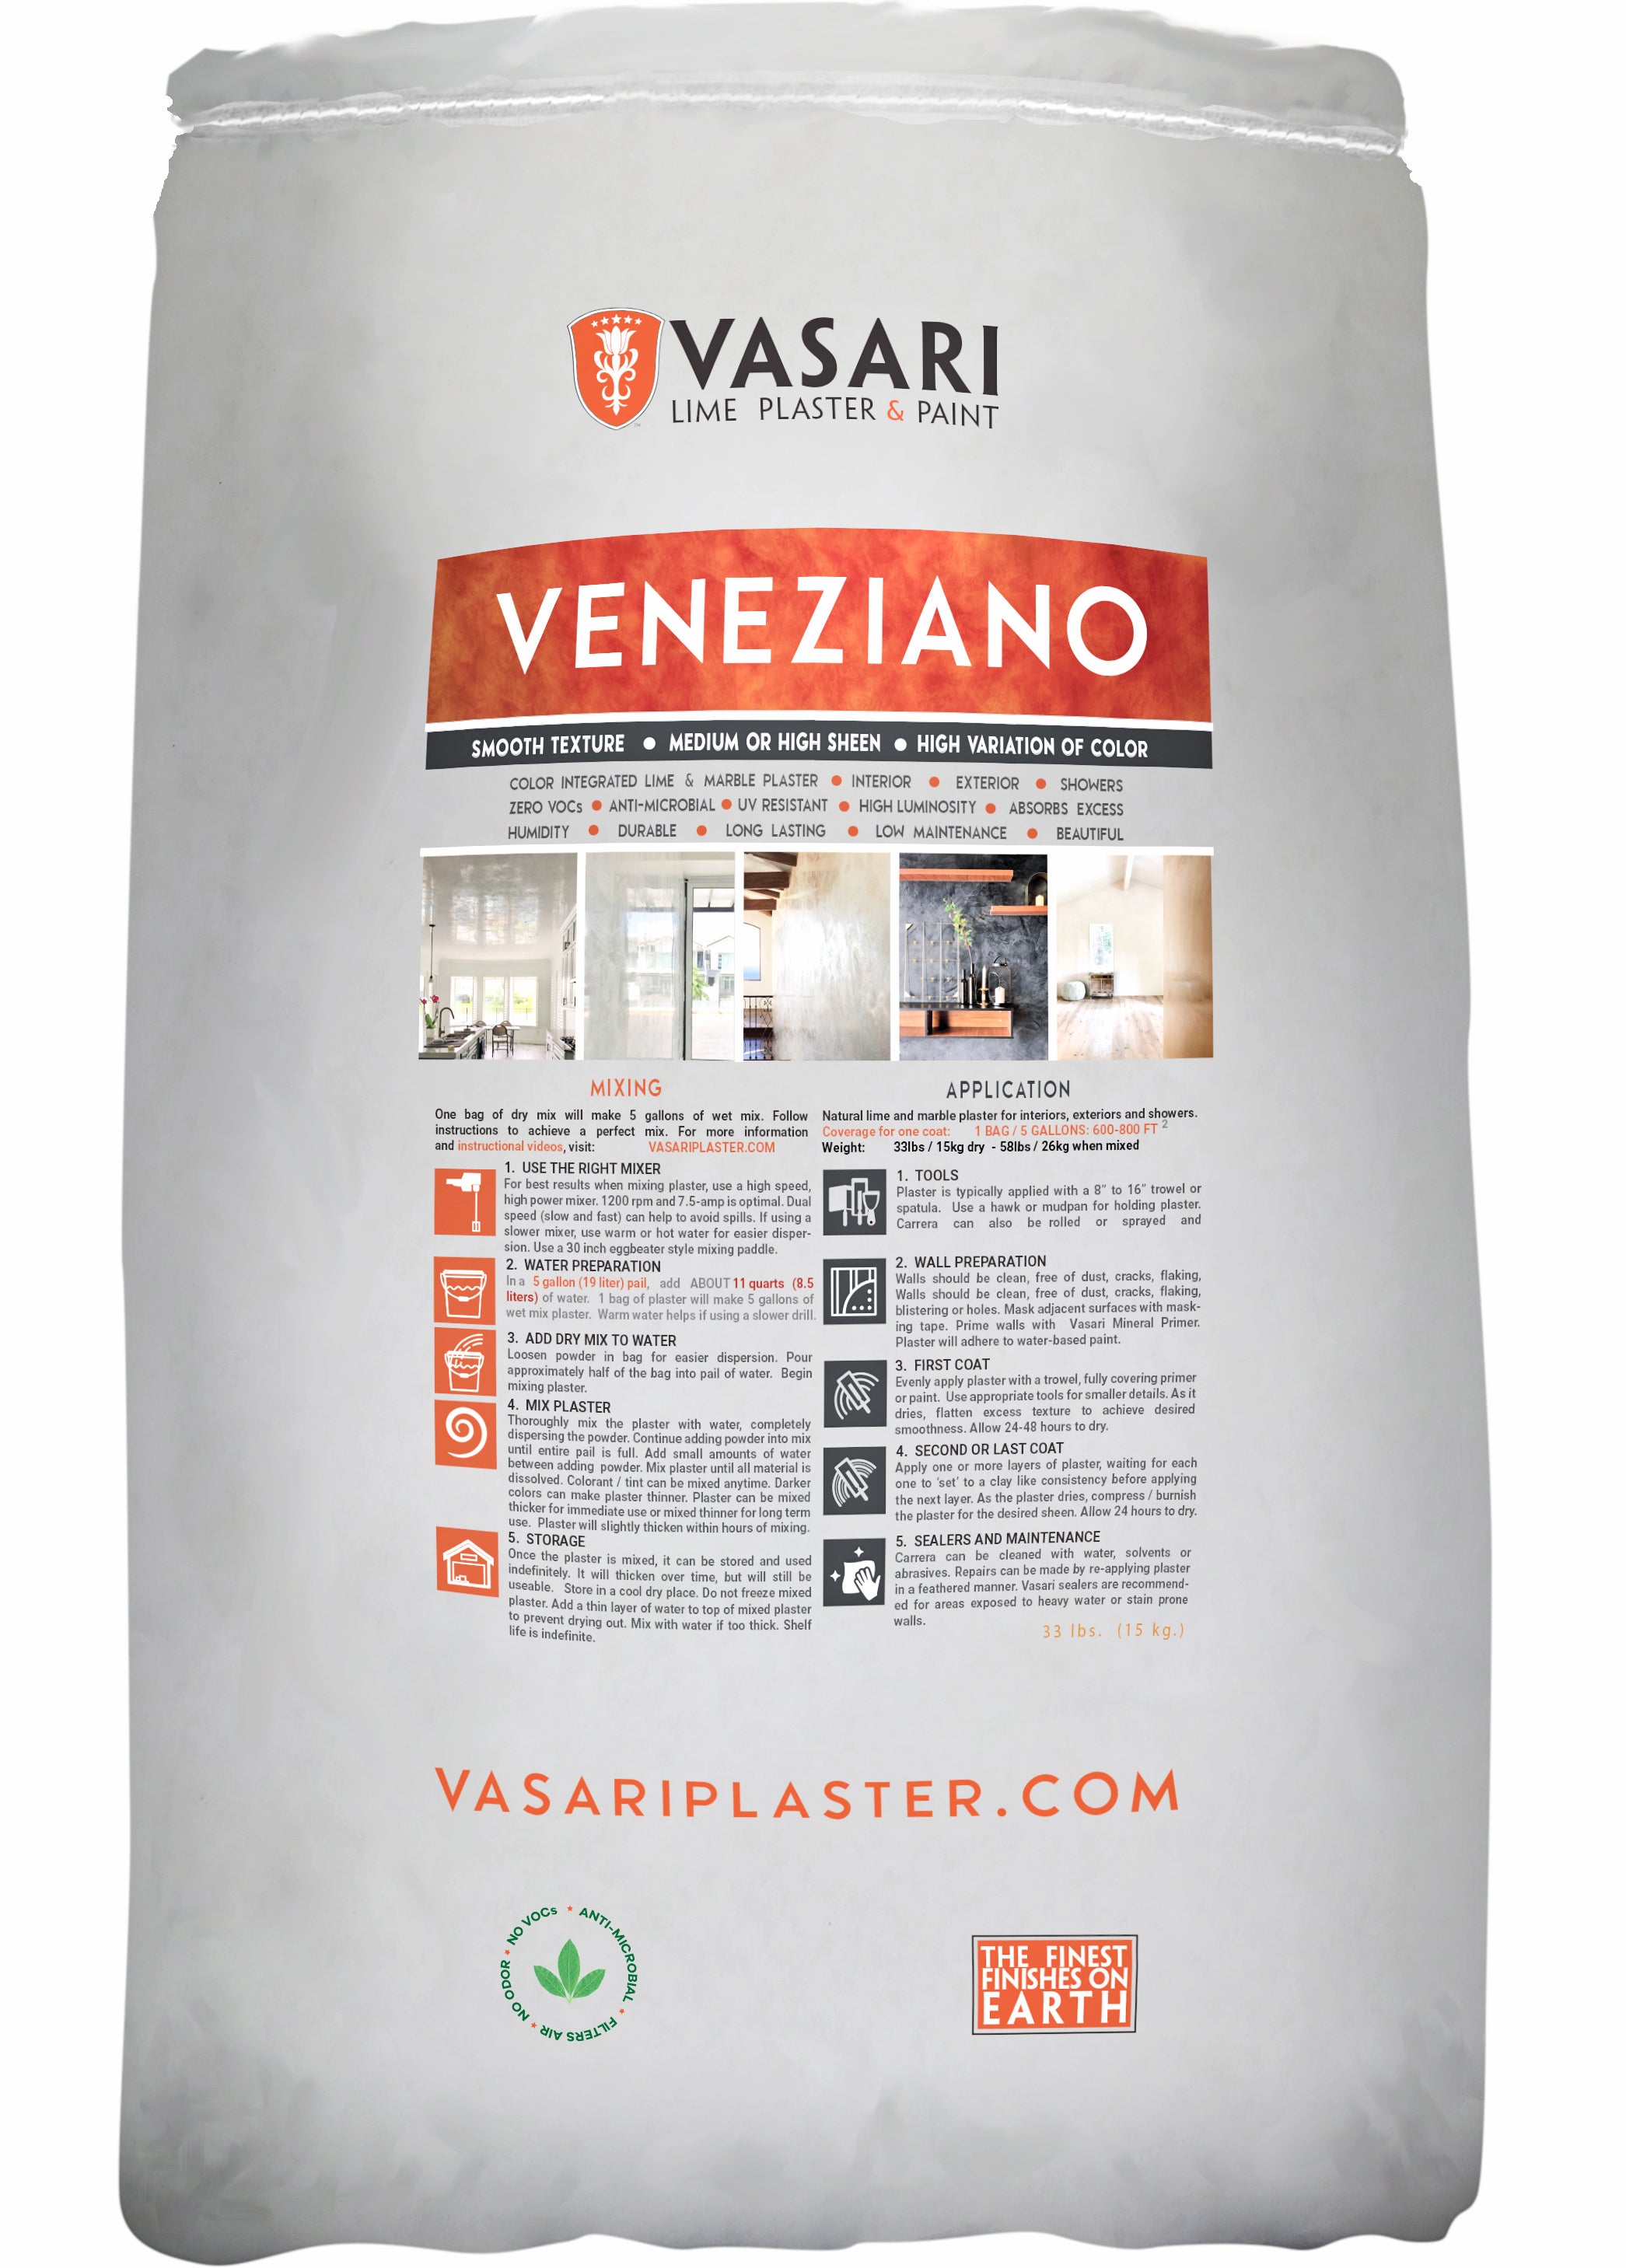 Venetian Plaster Guide: Definition, Installation, Uses & More